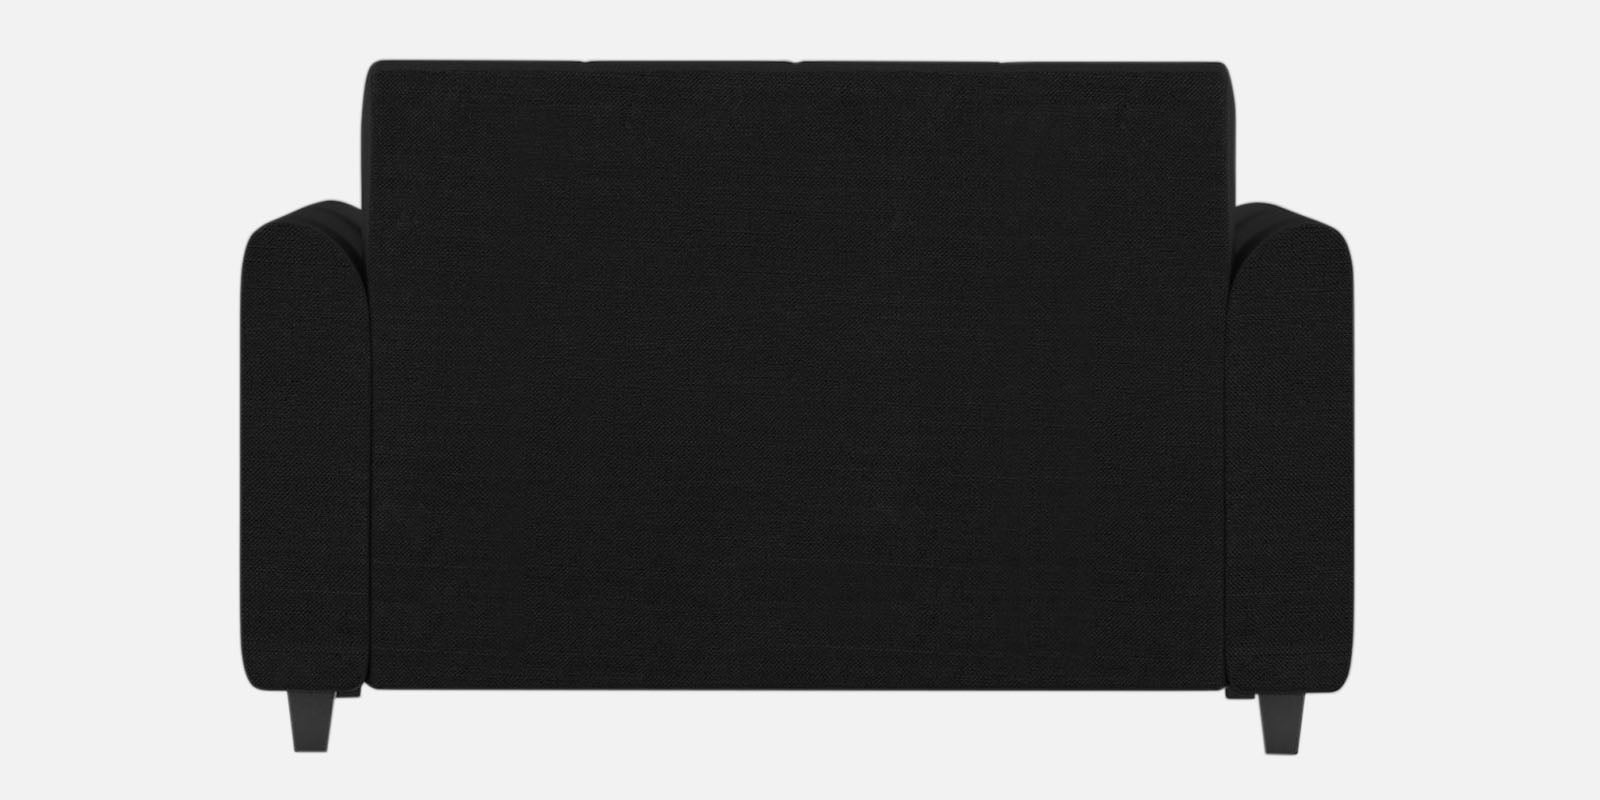 Denmark Fabric 2 Seater Sofa in Zed Black Colour